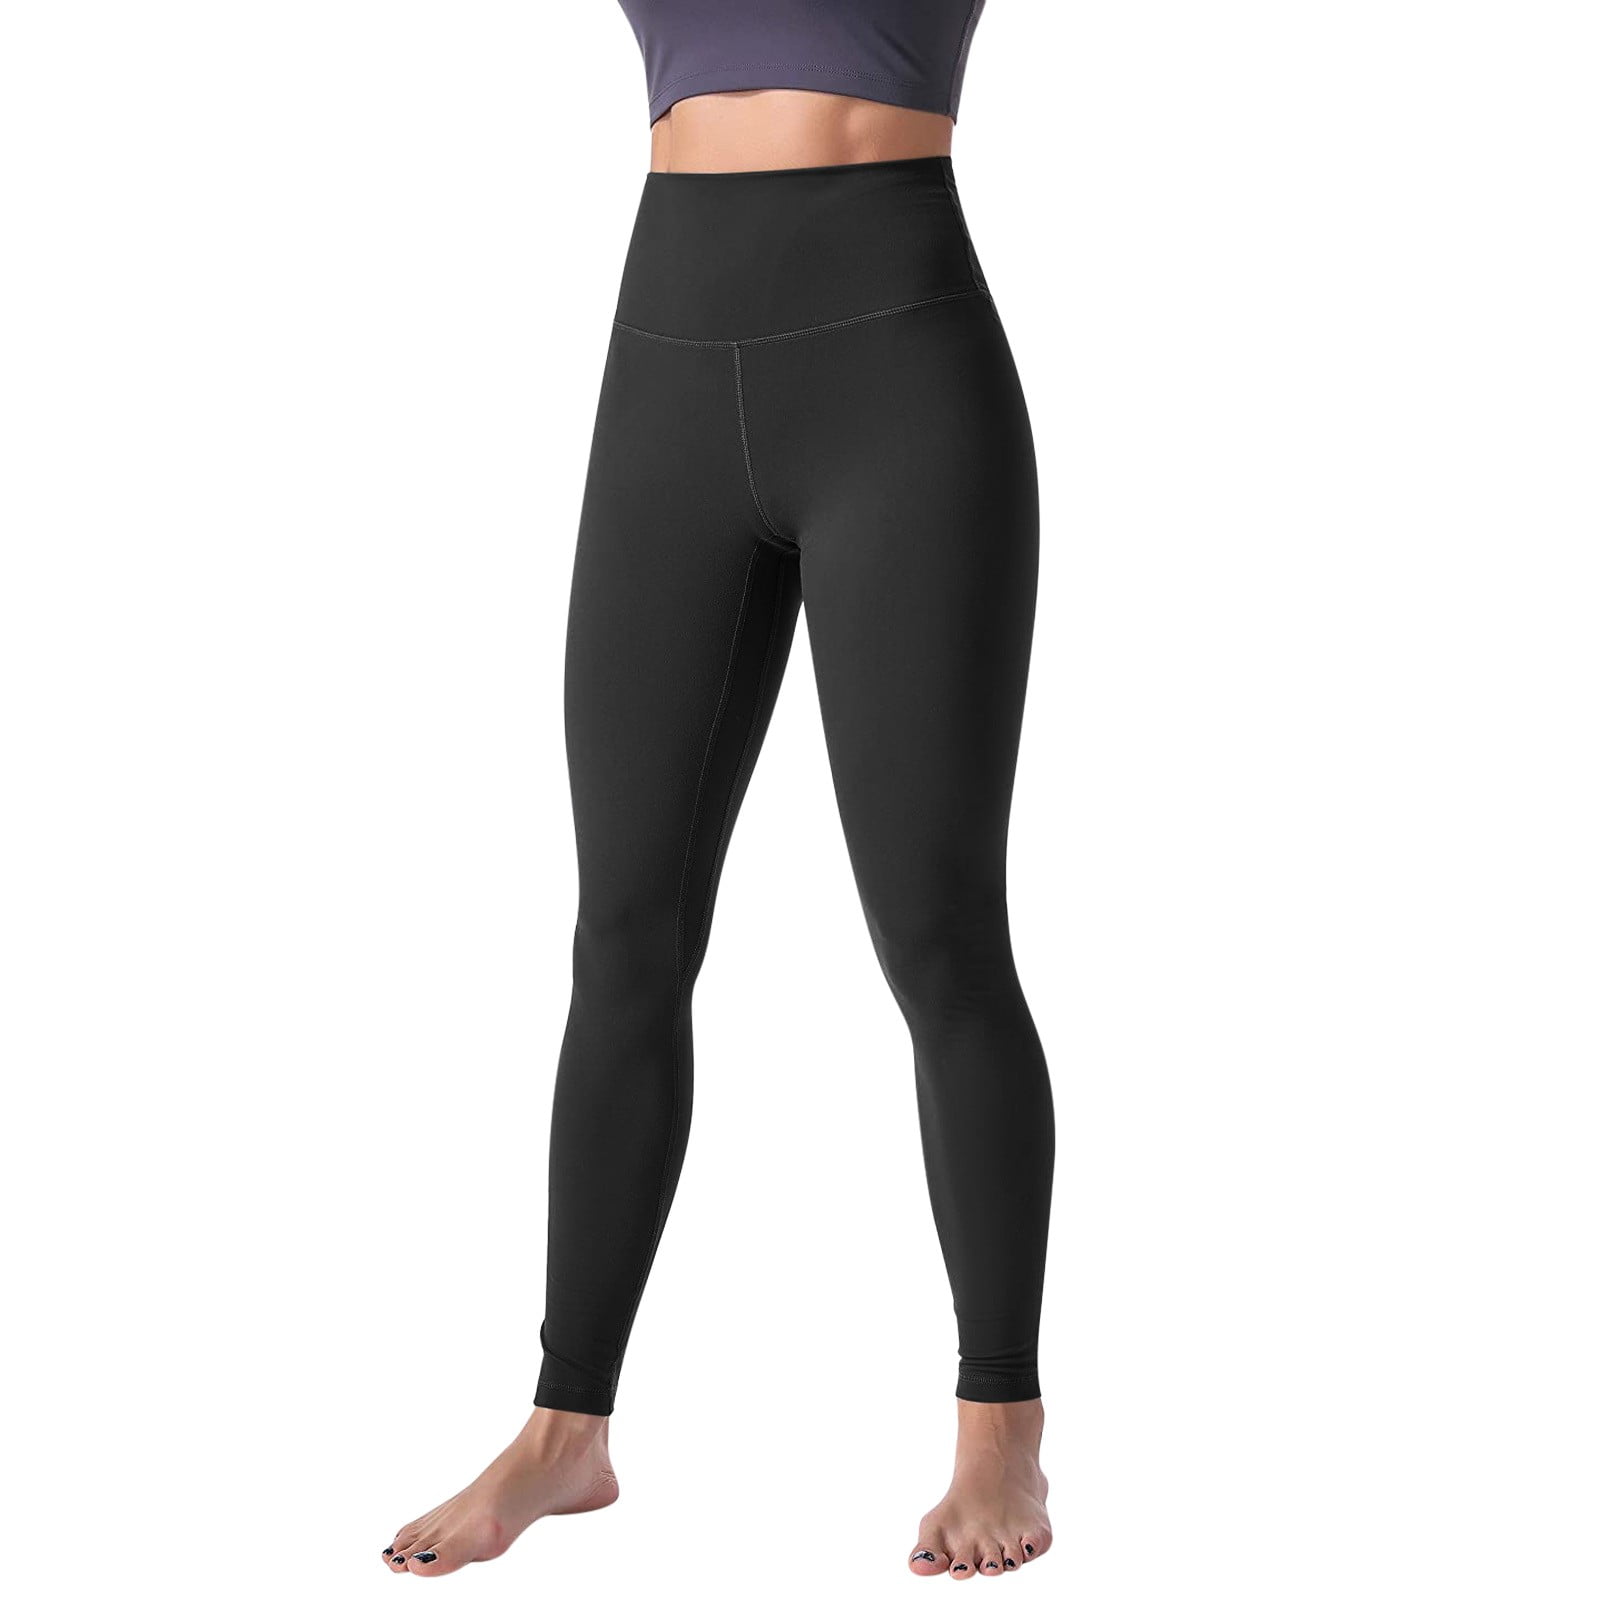 Jaco Athletic Pants for Women, Black Activewear Yoga Pants with Elastic  Waistband, Large